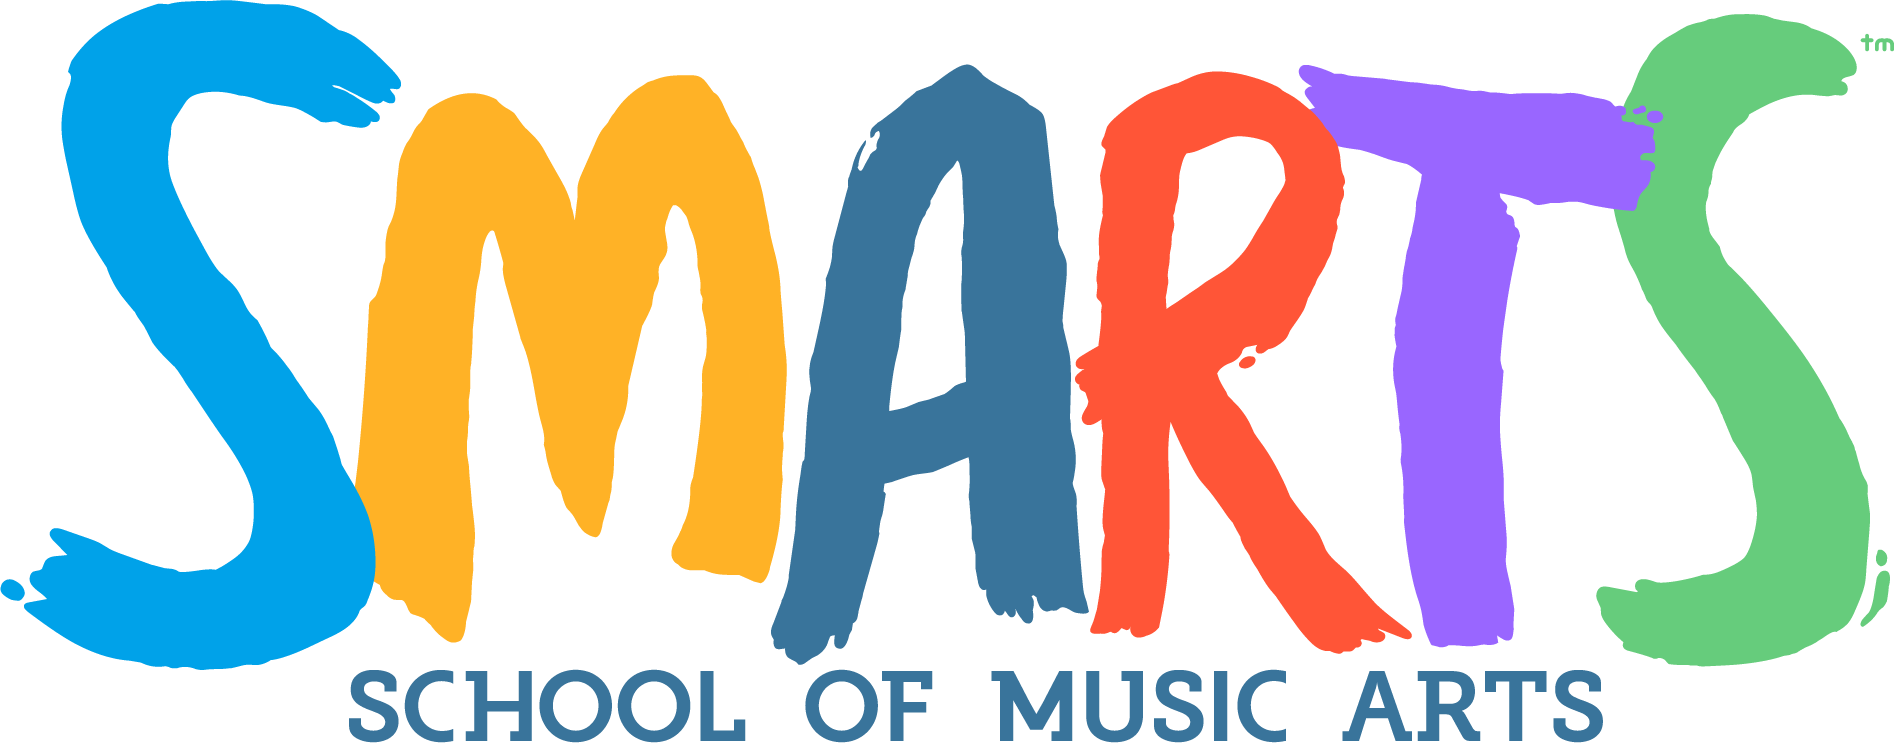 SMARTS Logo